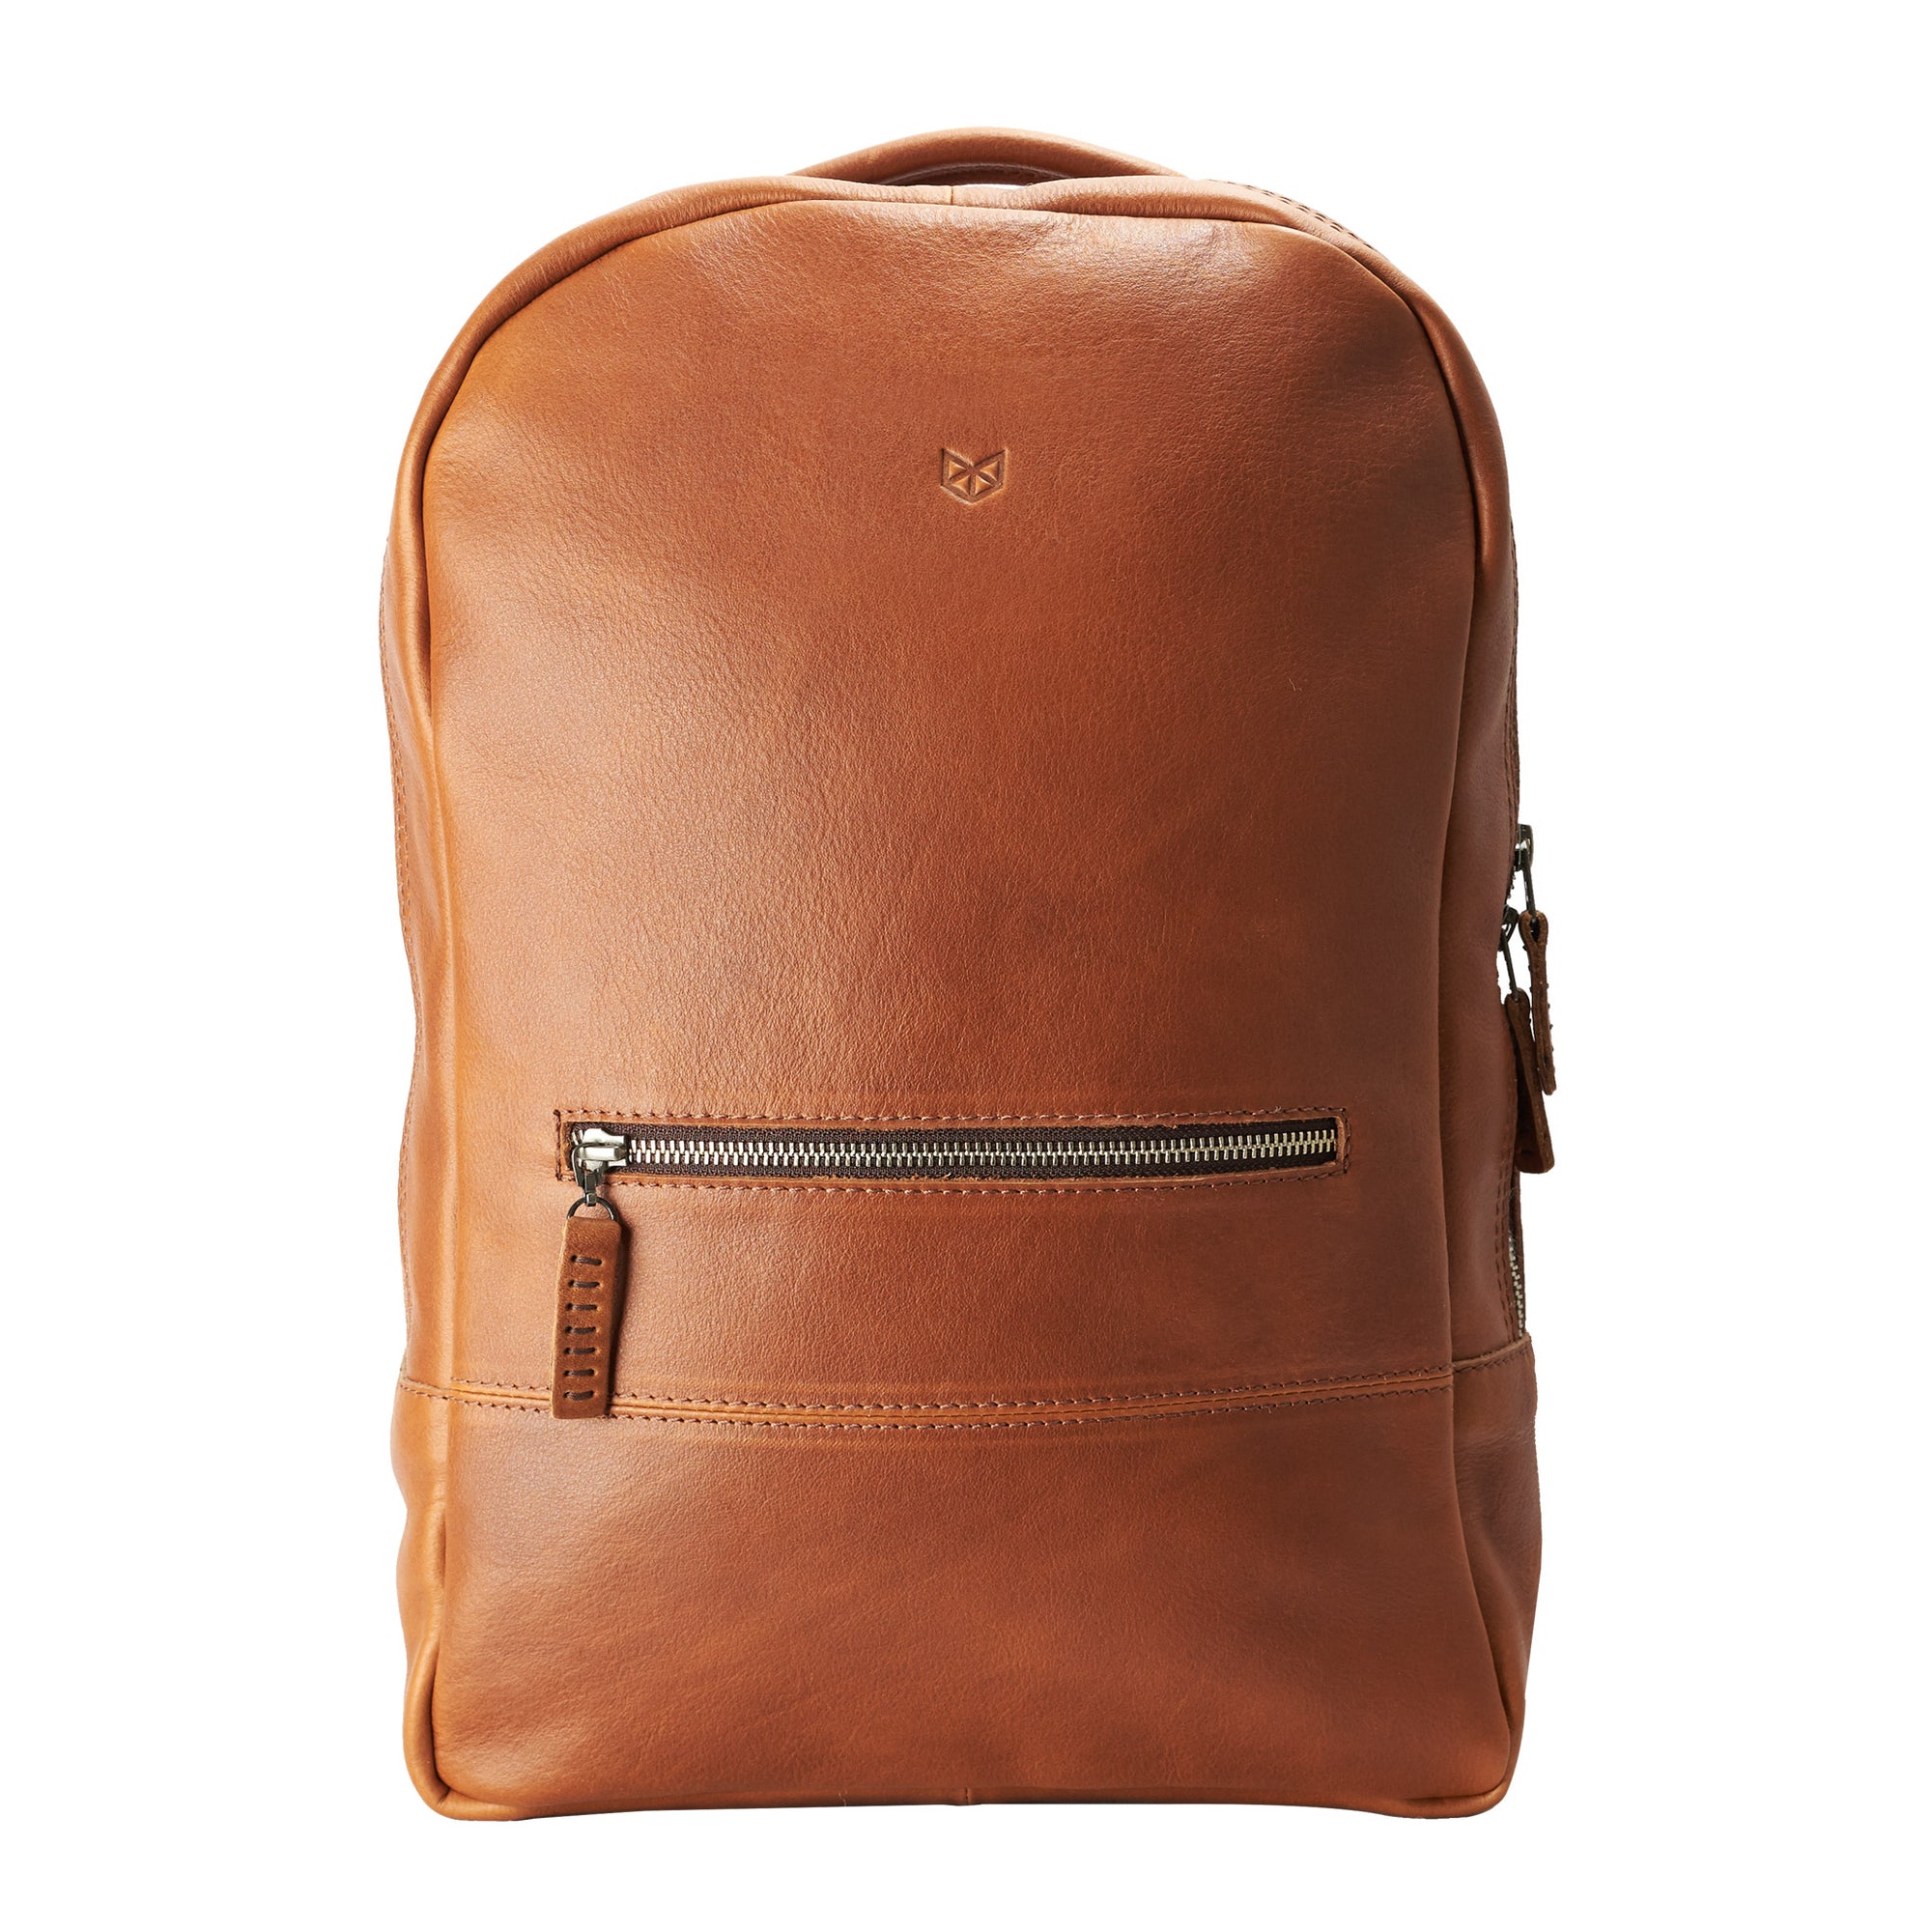 Tan. Bisonte Backpack Rucksack by Capra Leather